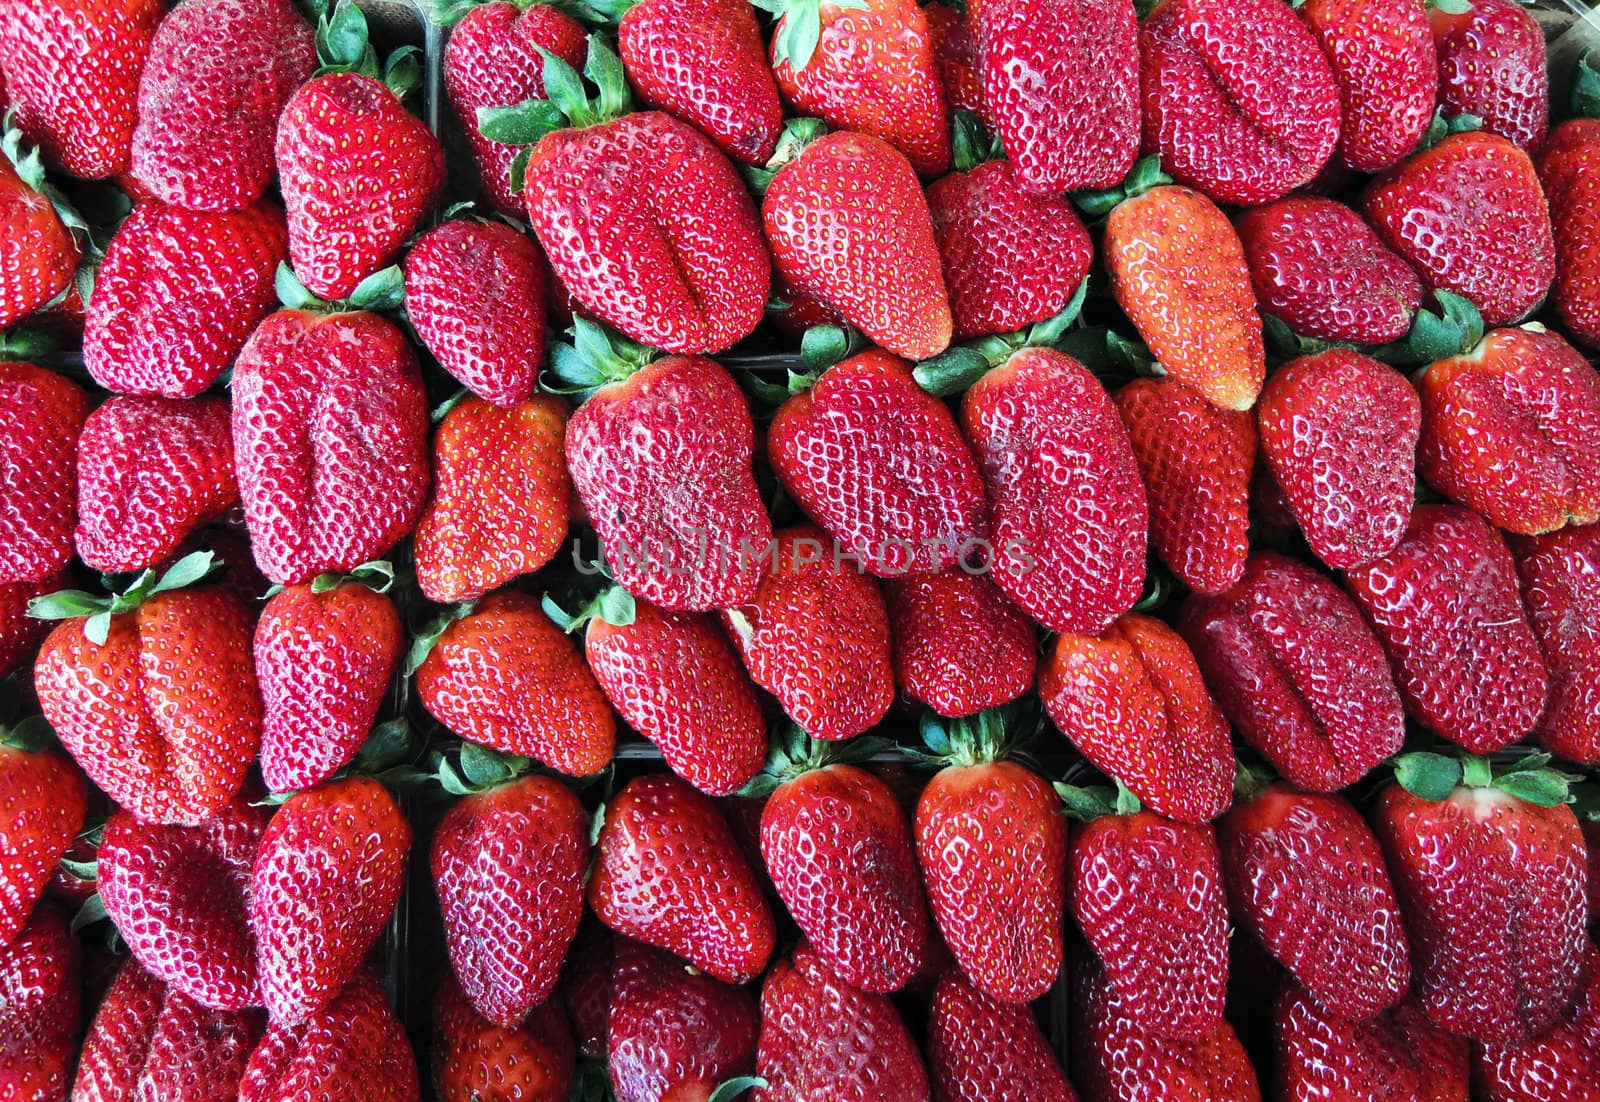 Strawberry background by MalyDesigner